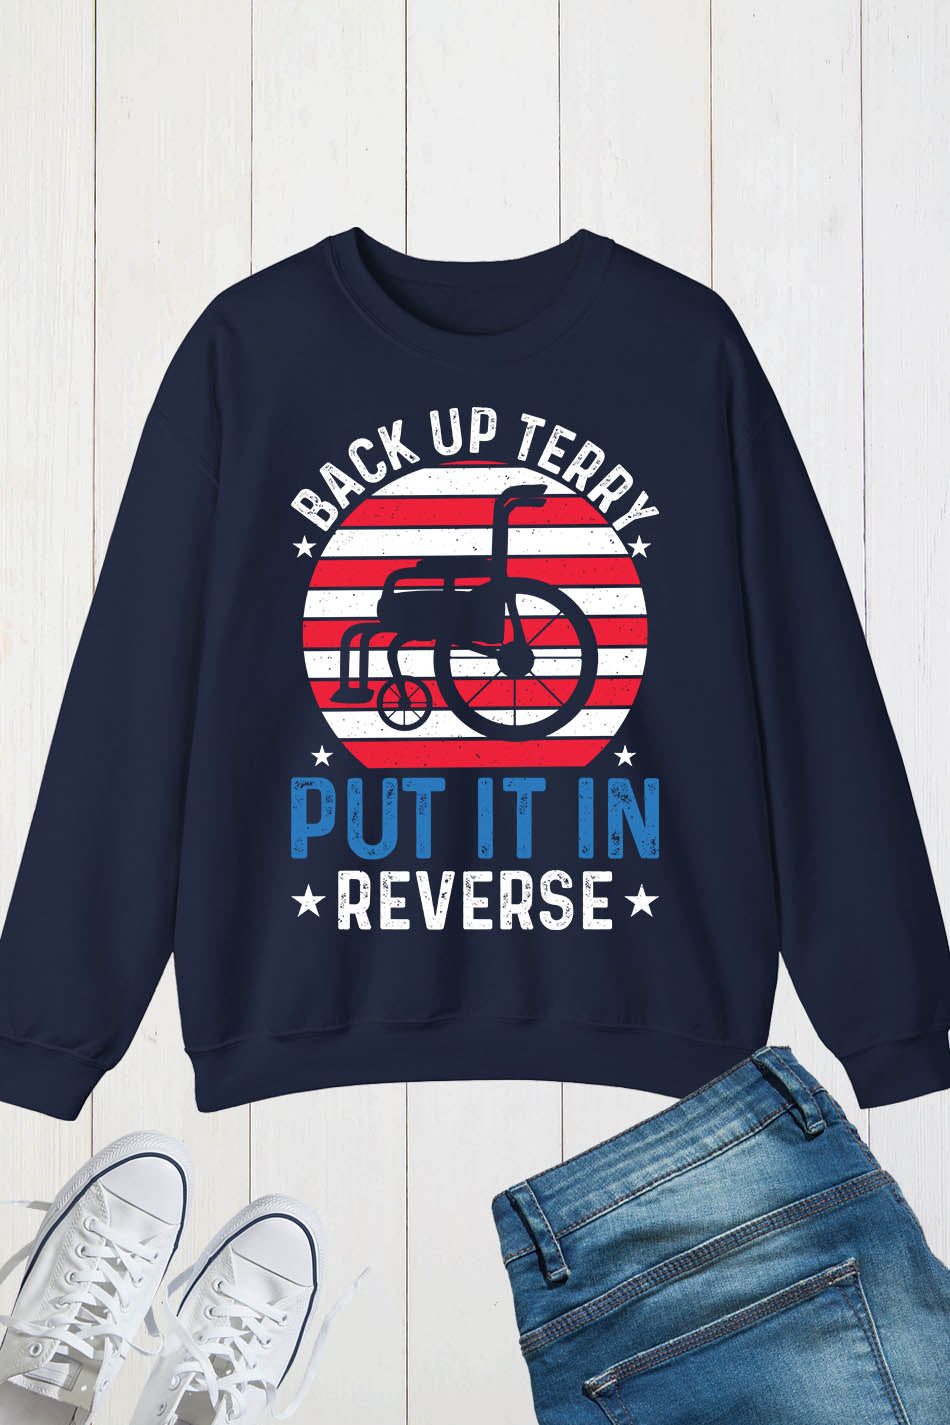 Back It Up Terry Put It In Reverse Patriotic Sweatshirt